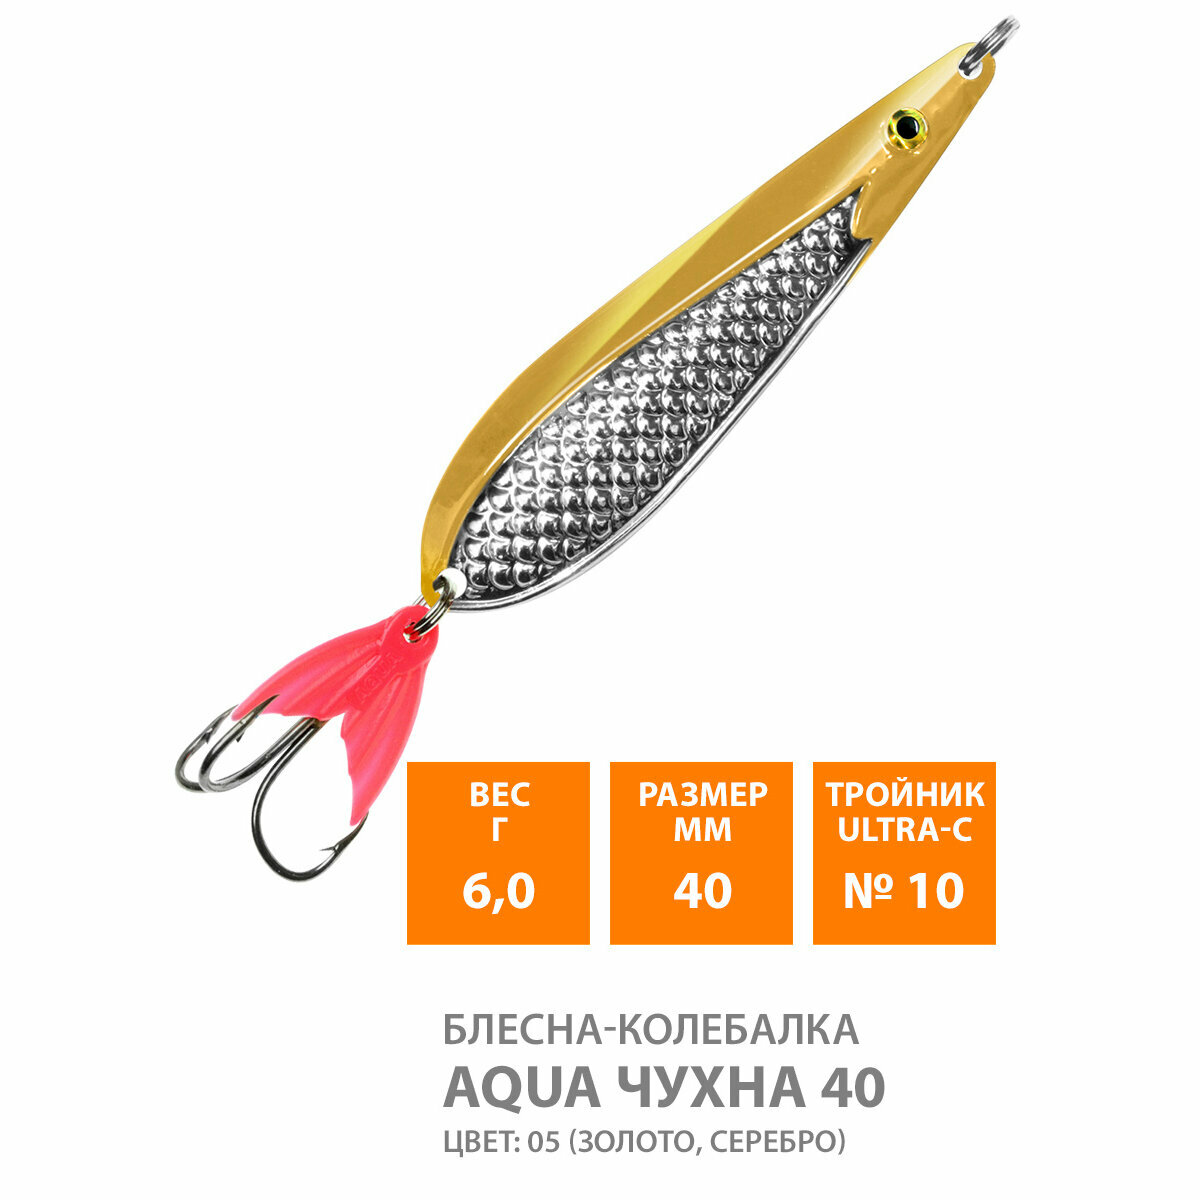 Блесна колебалка для рыбалки AQUA Чухна 40mm 6g цвет 05